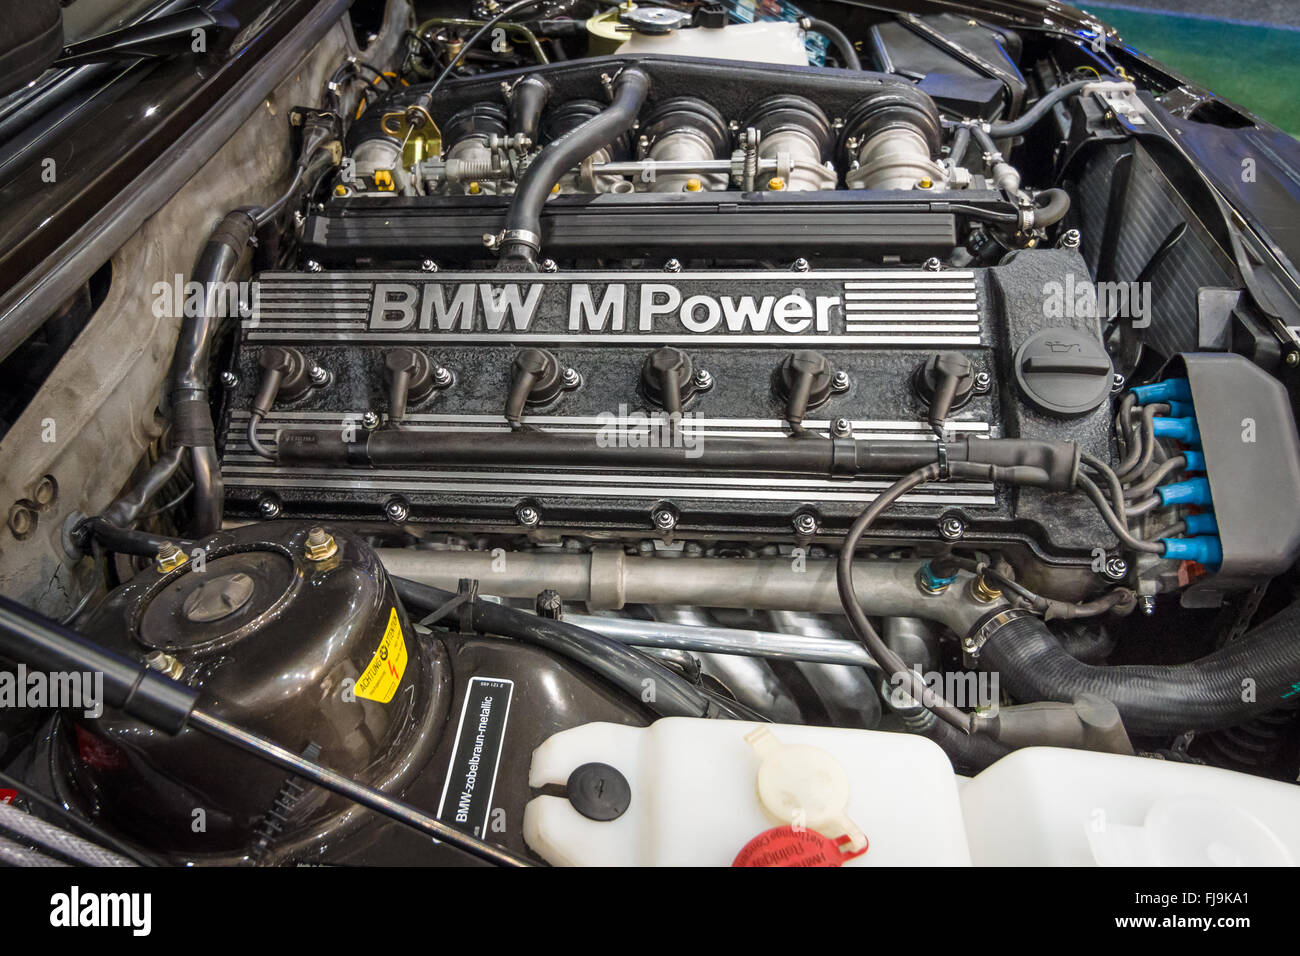 Engine M Power of BMW 3 Series (E36). Close-up Stock Photo - Alamy